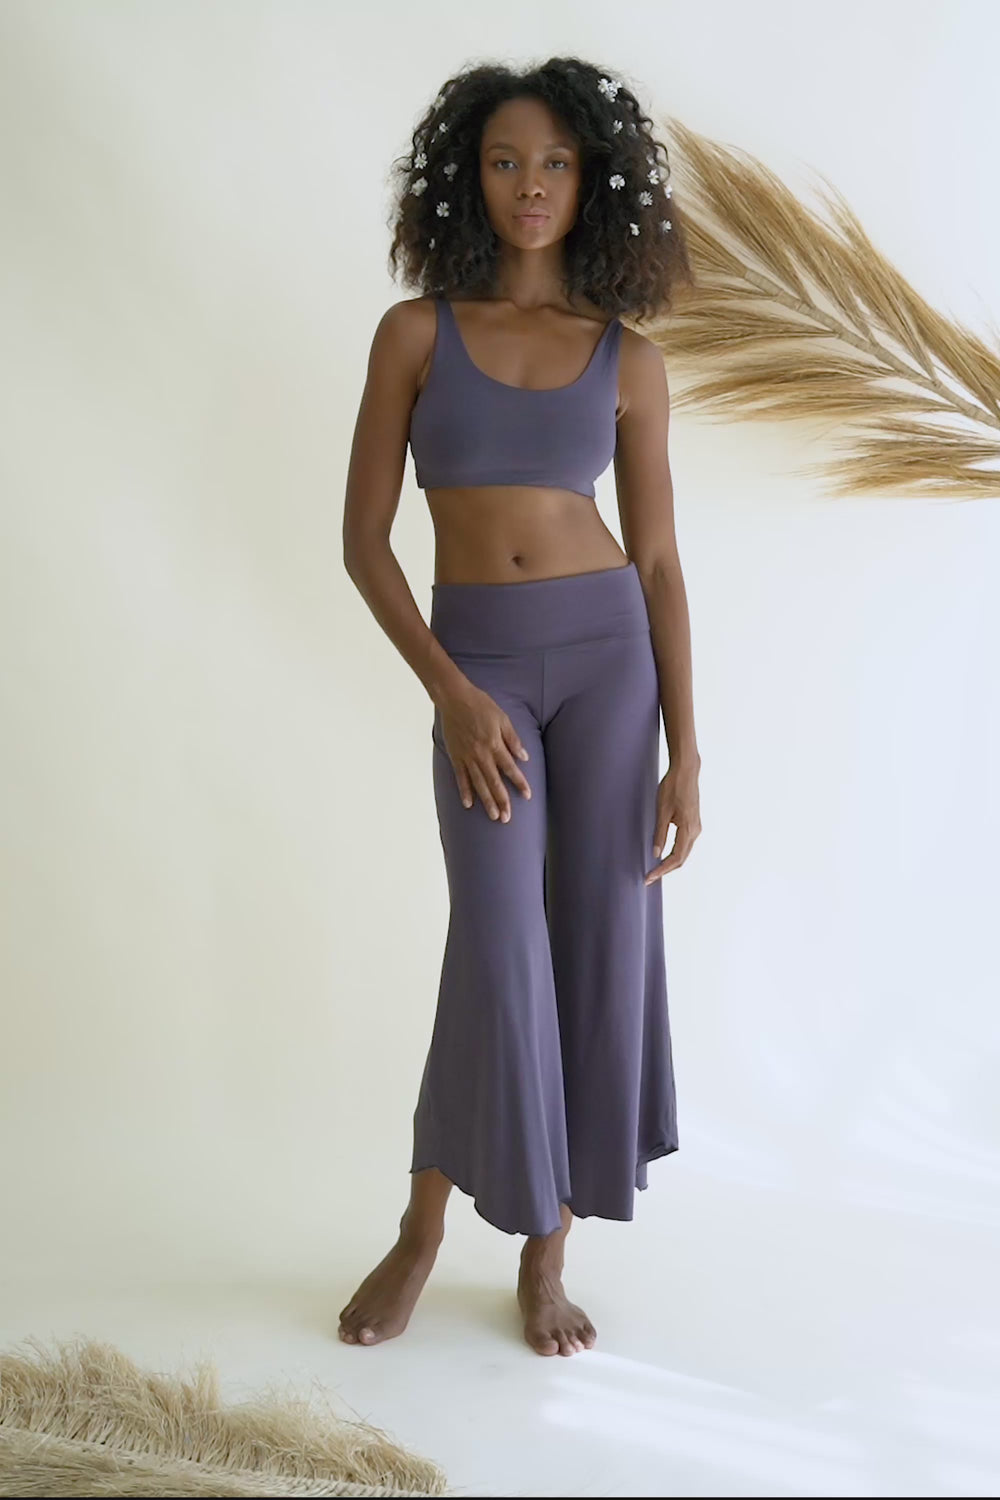 Eco-Friendly Flare Yoga Pants Australia | Layla Flares In Sage